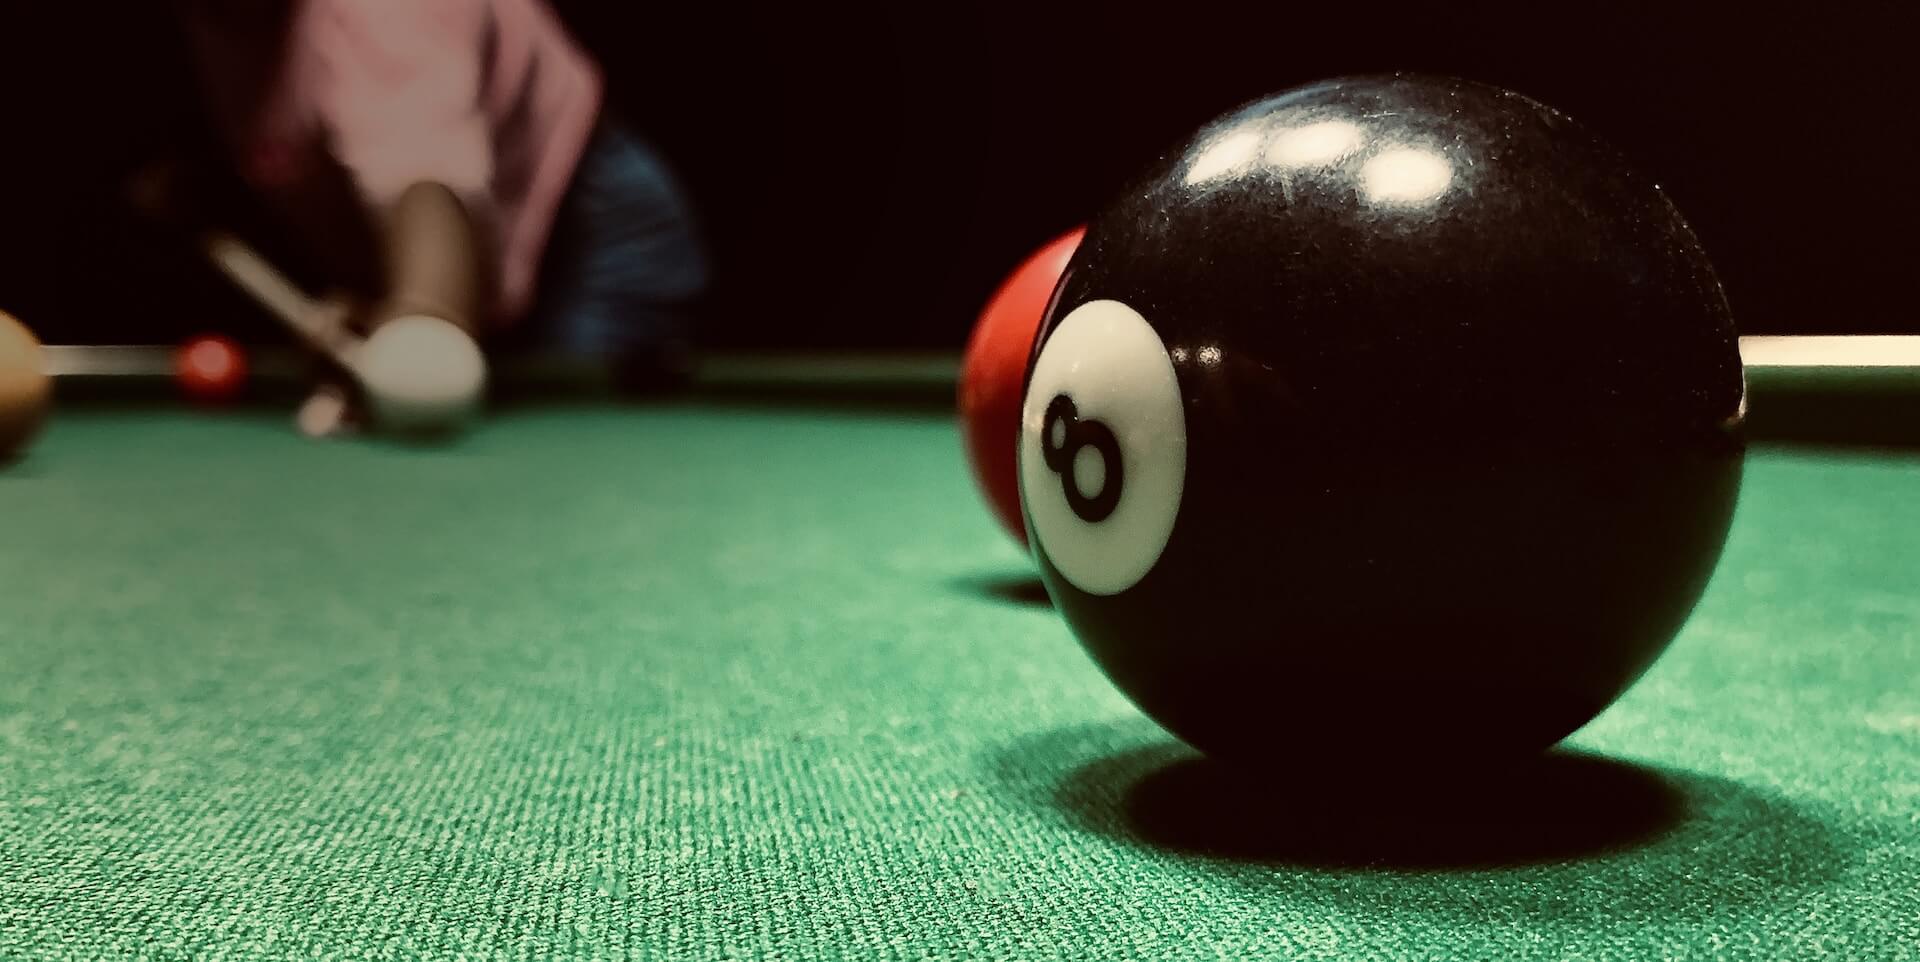 Closeup of eight ball on pool table